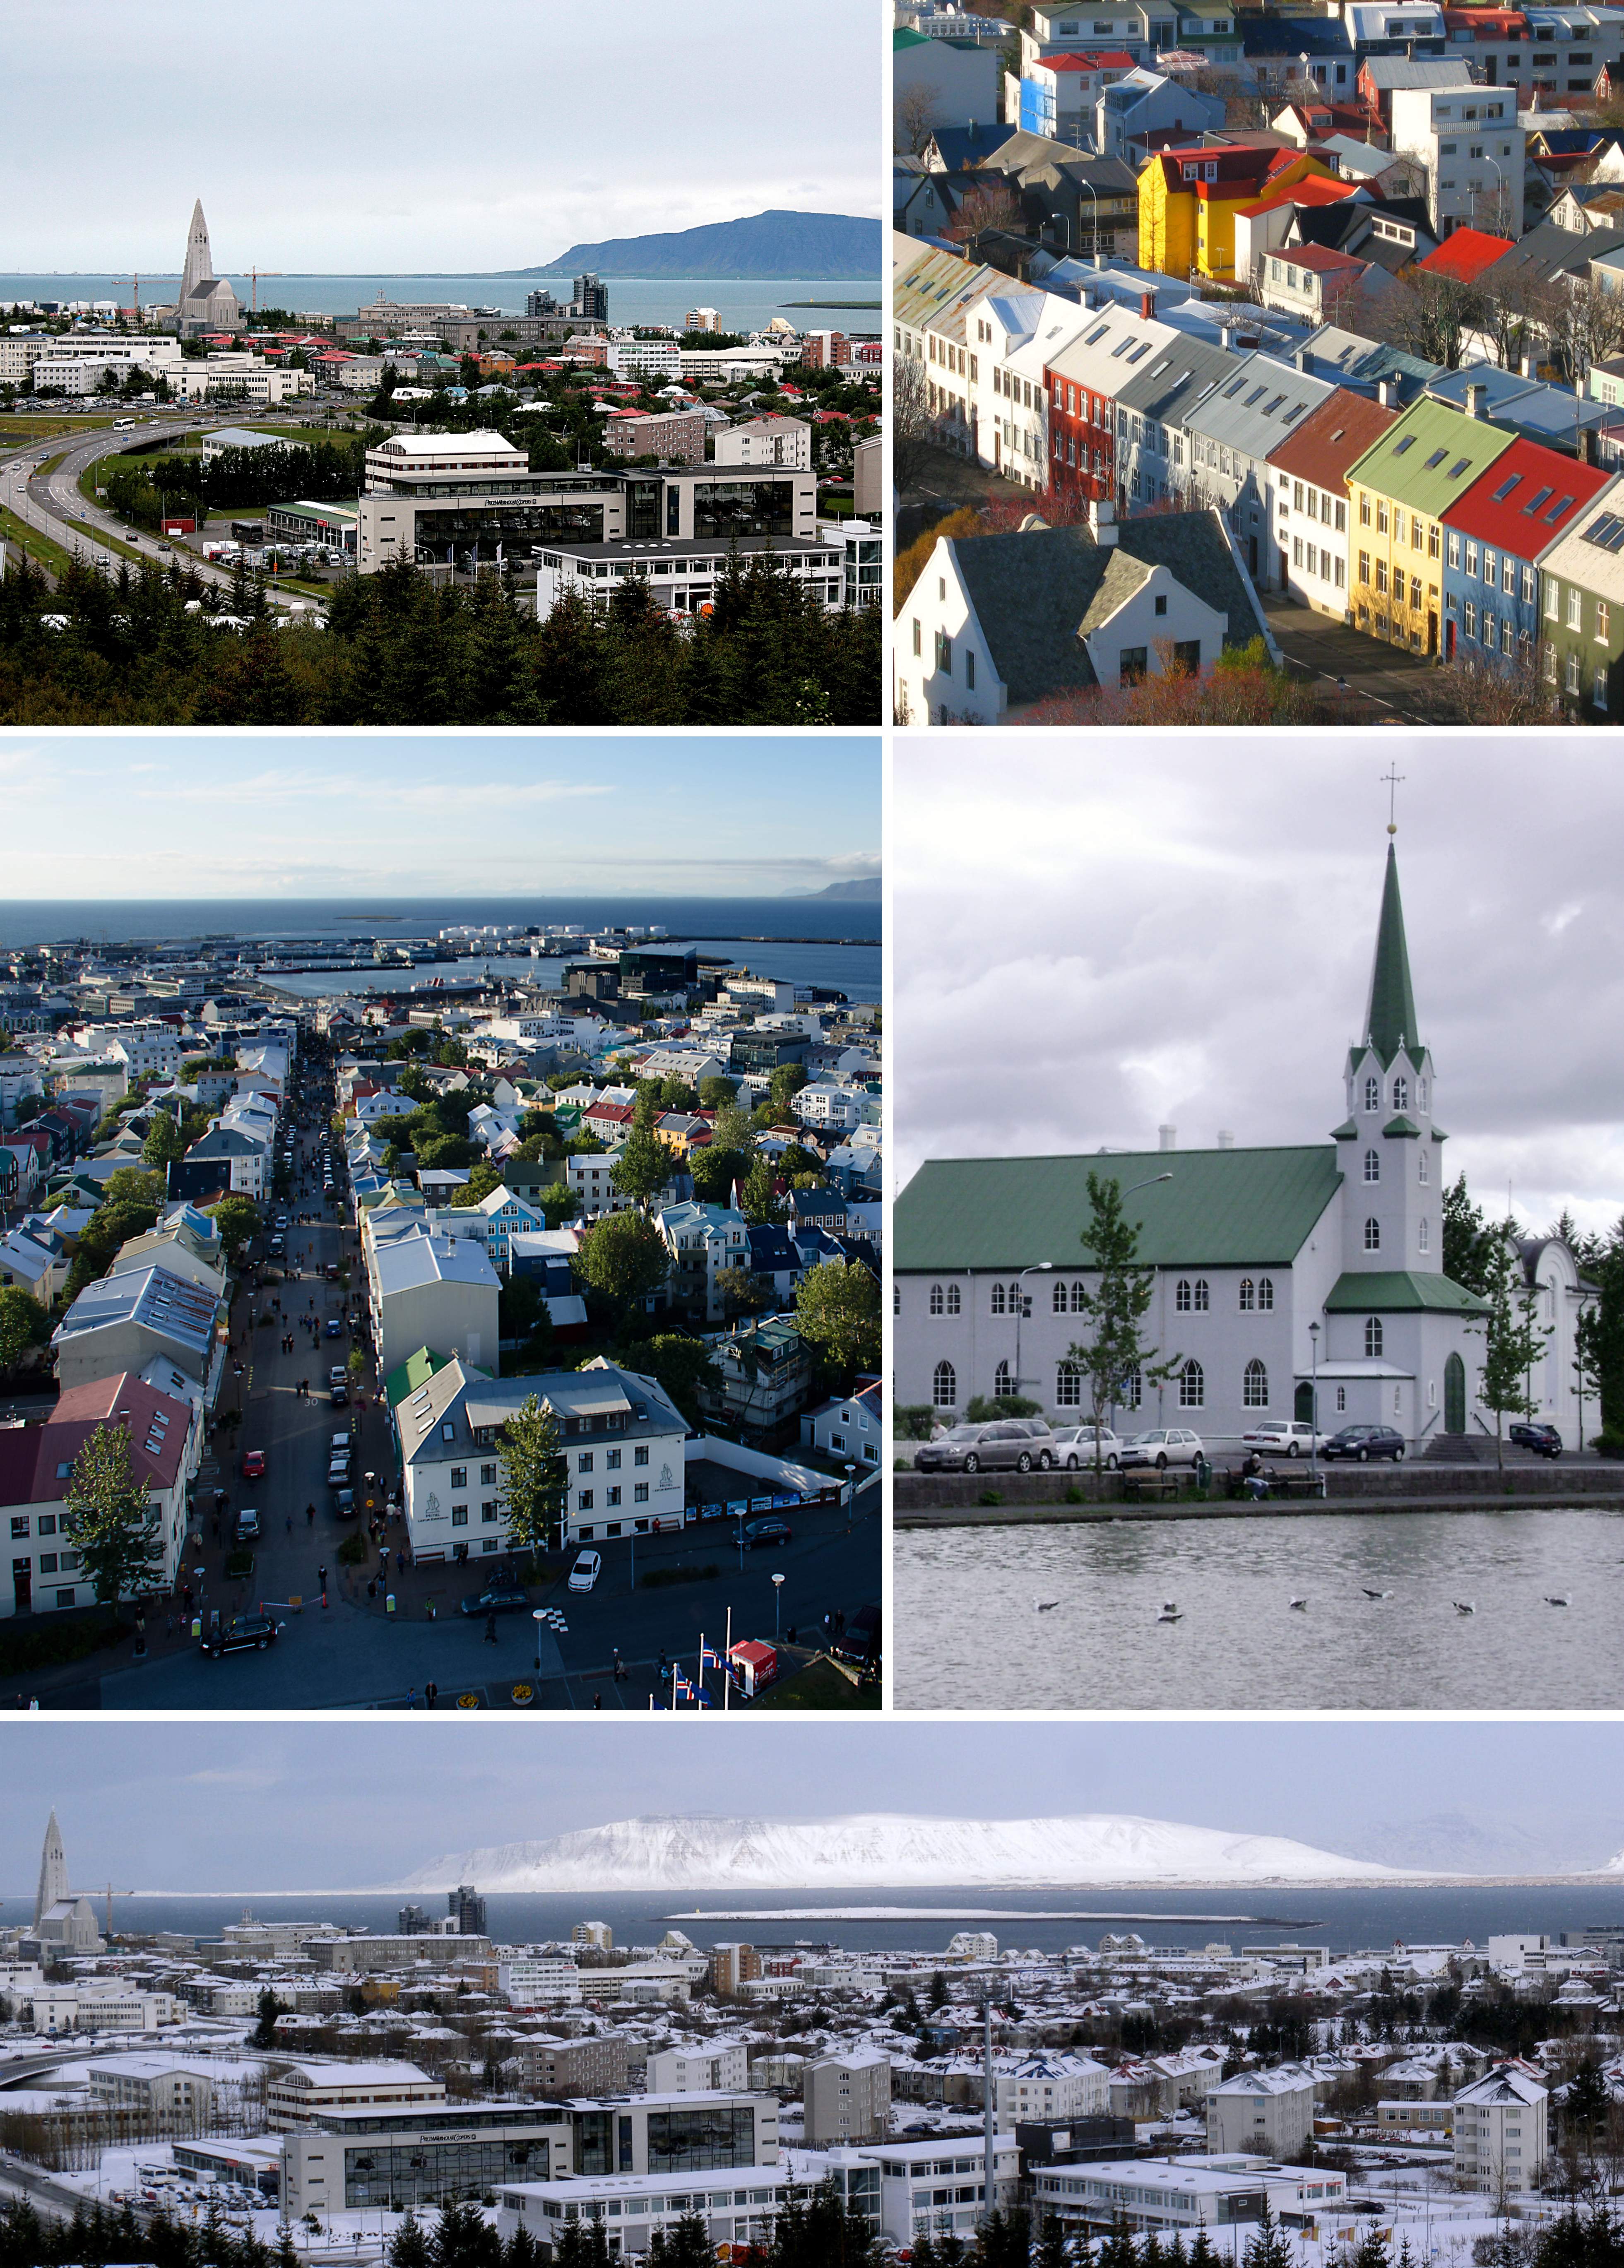 The history of Iceland’s capital Reykjavik